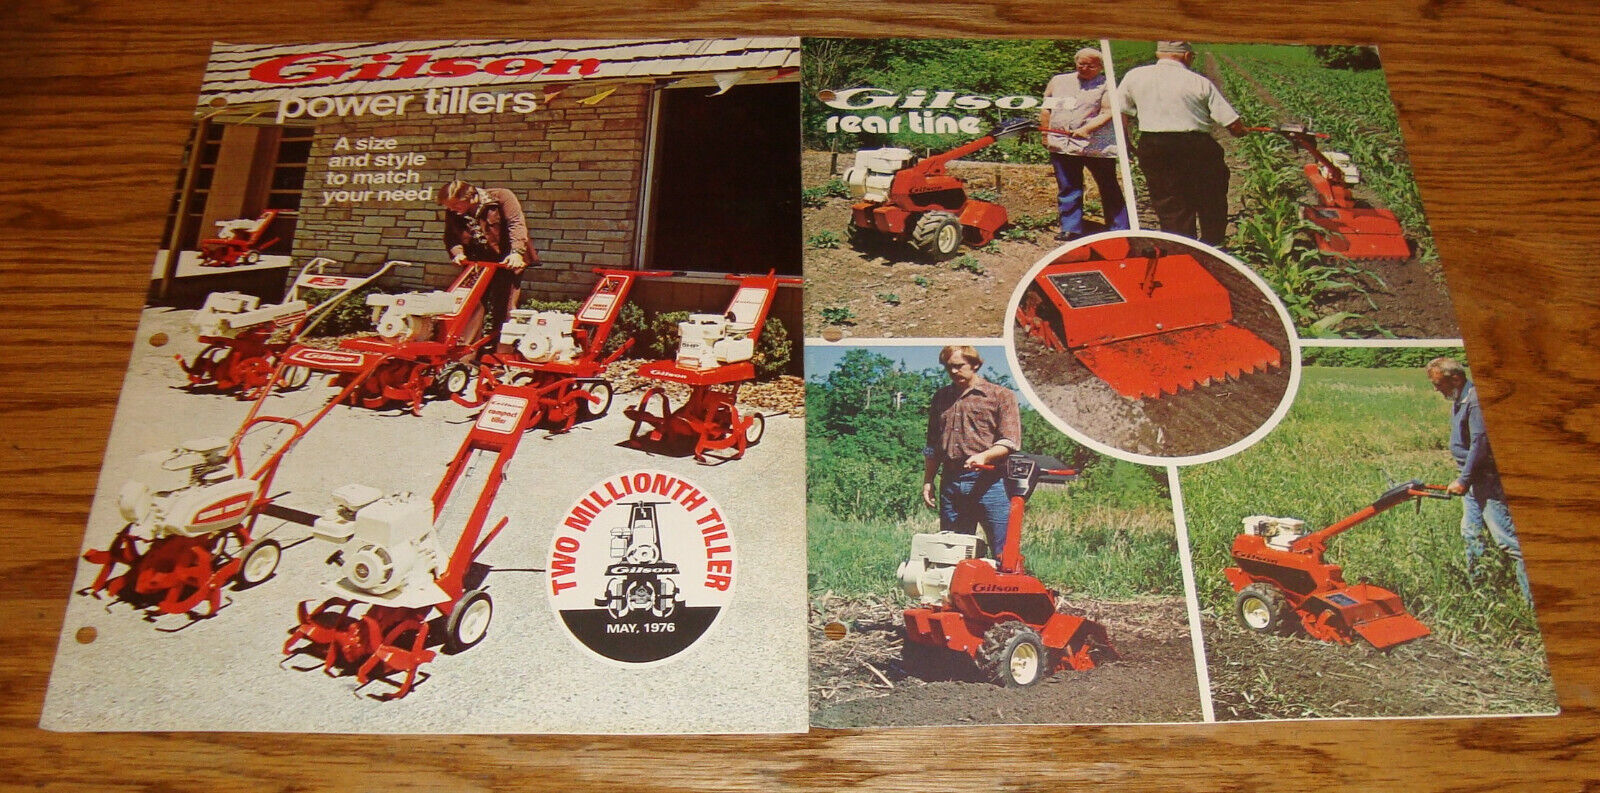 Original 1977 1978 Gilson Rear Tine & Power Tiller Sales Brochure Lot of 2 